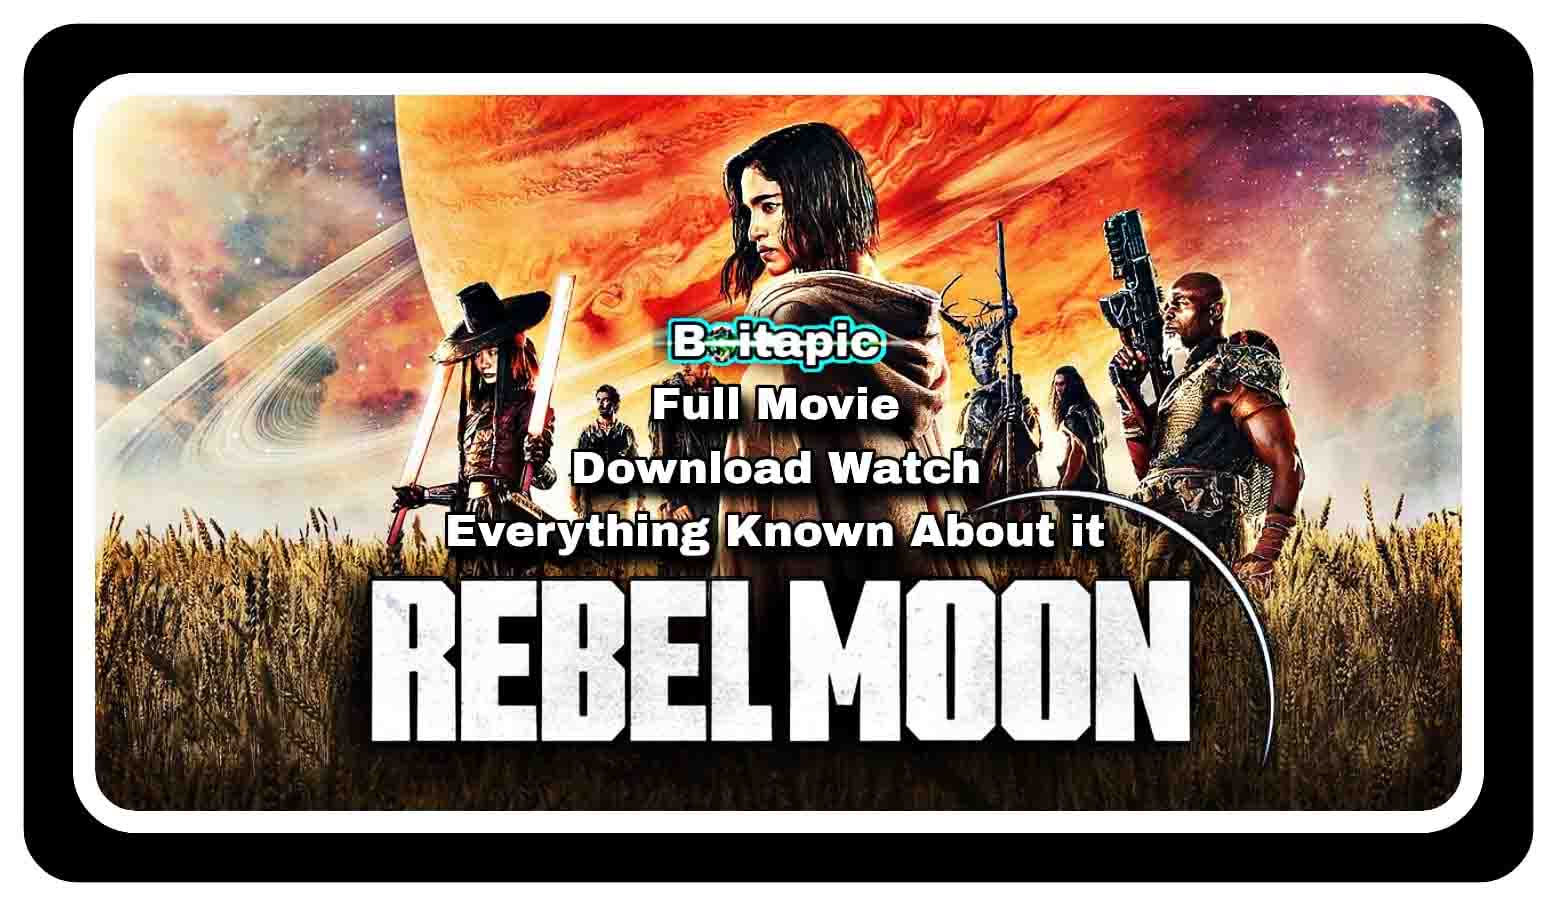 Rebel Moon Full Movie Download